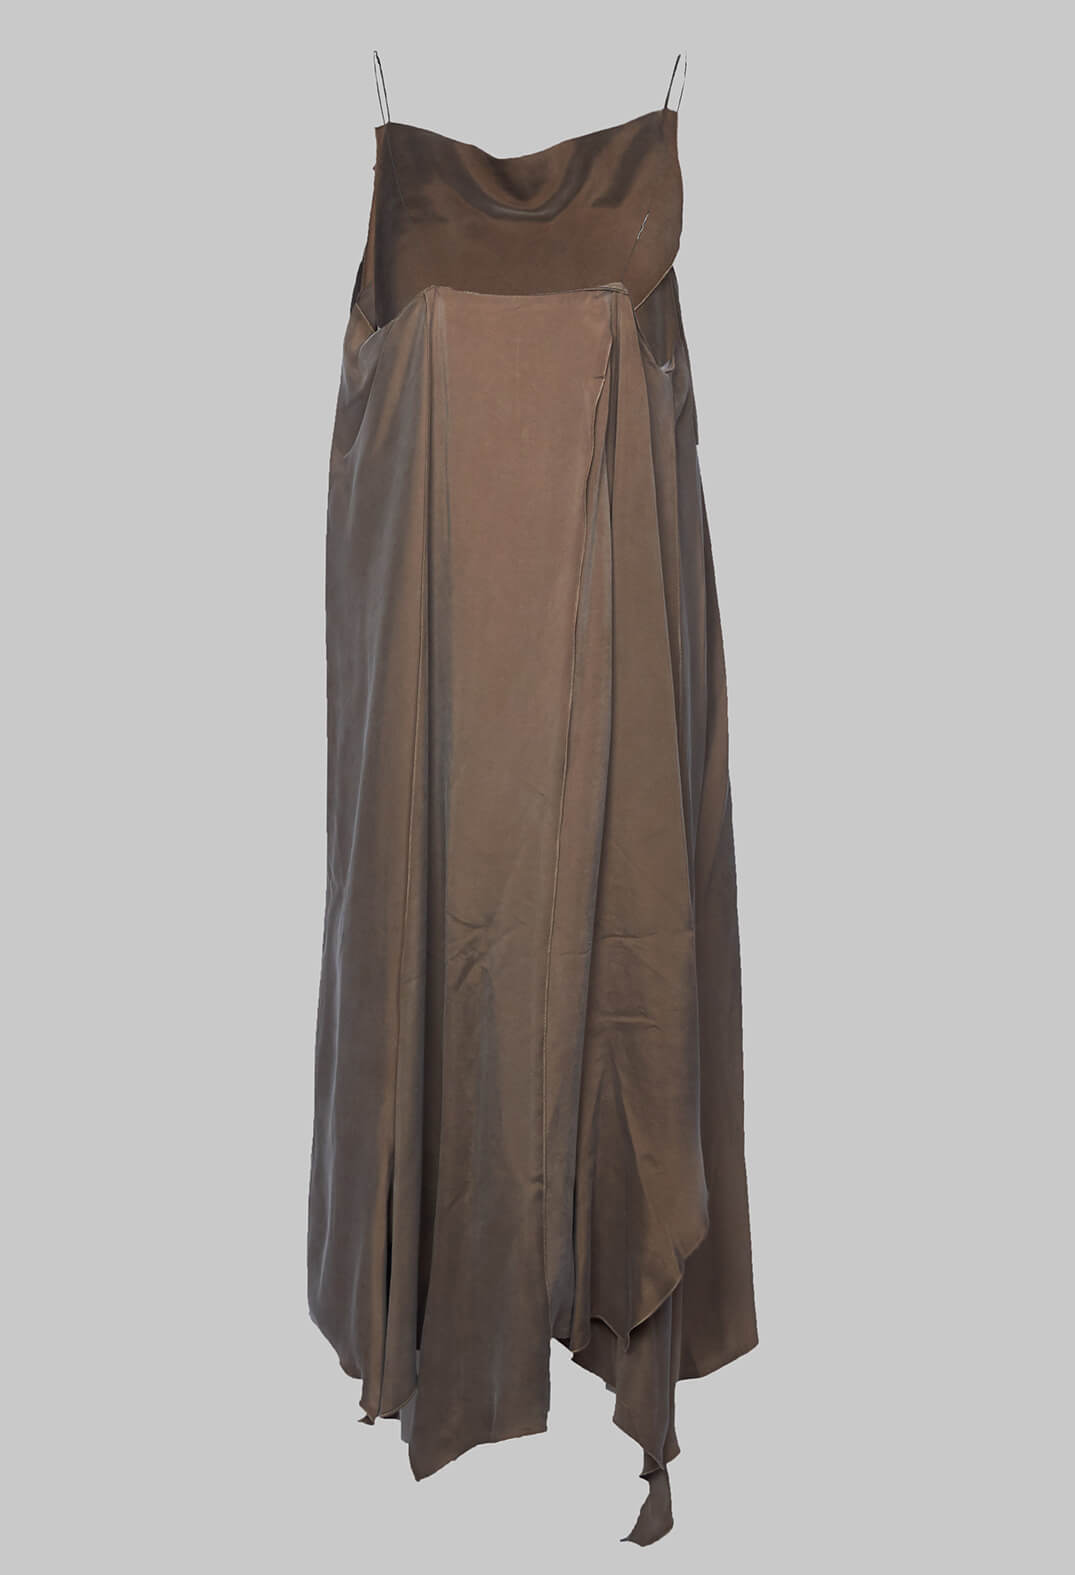 Multilayed Dress with Asymmetric Neckline in Khaki